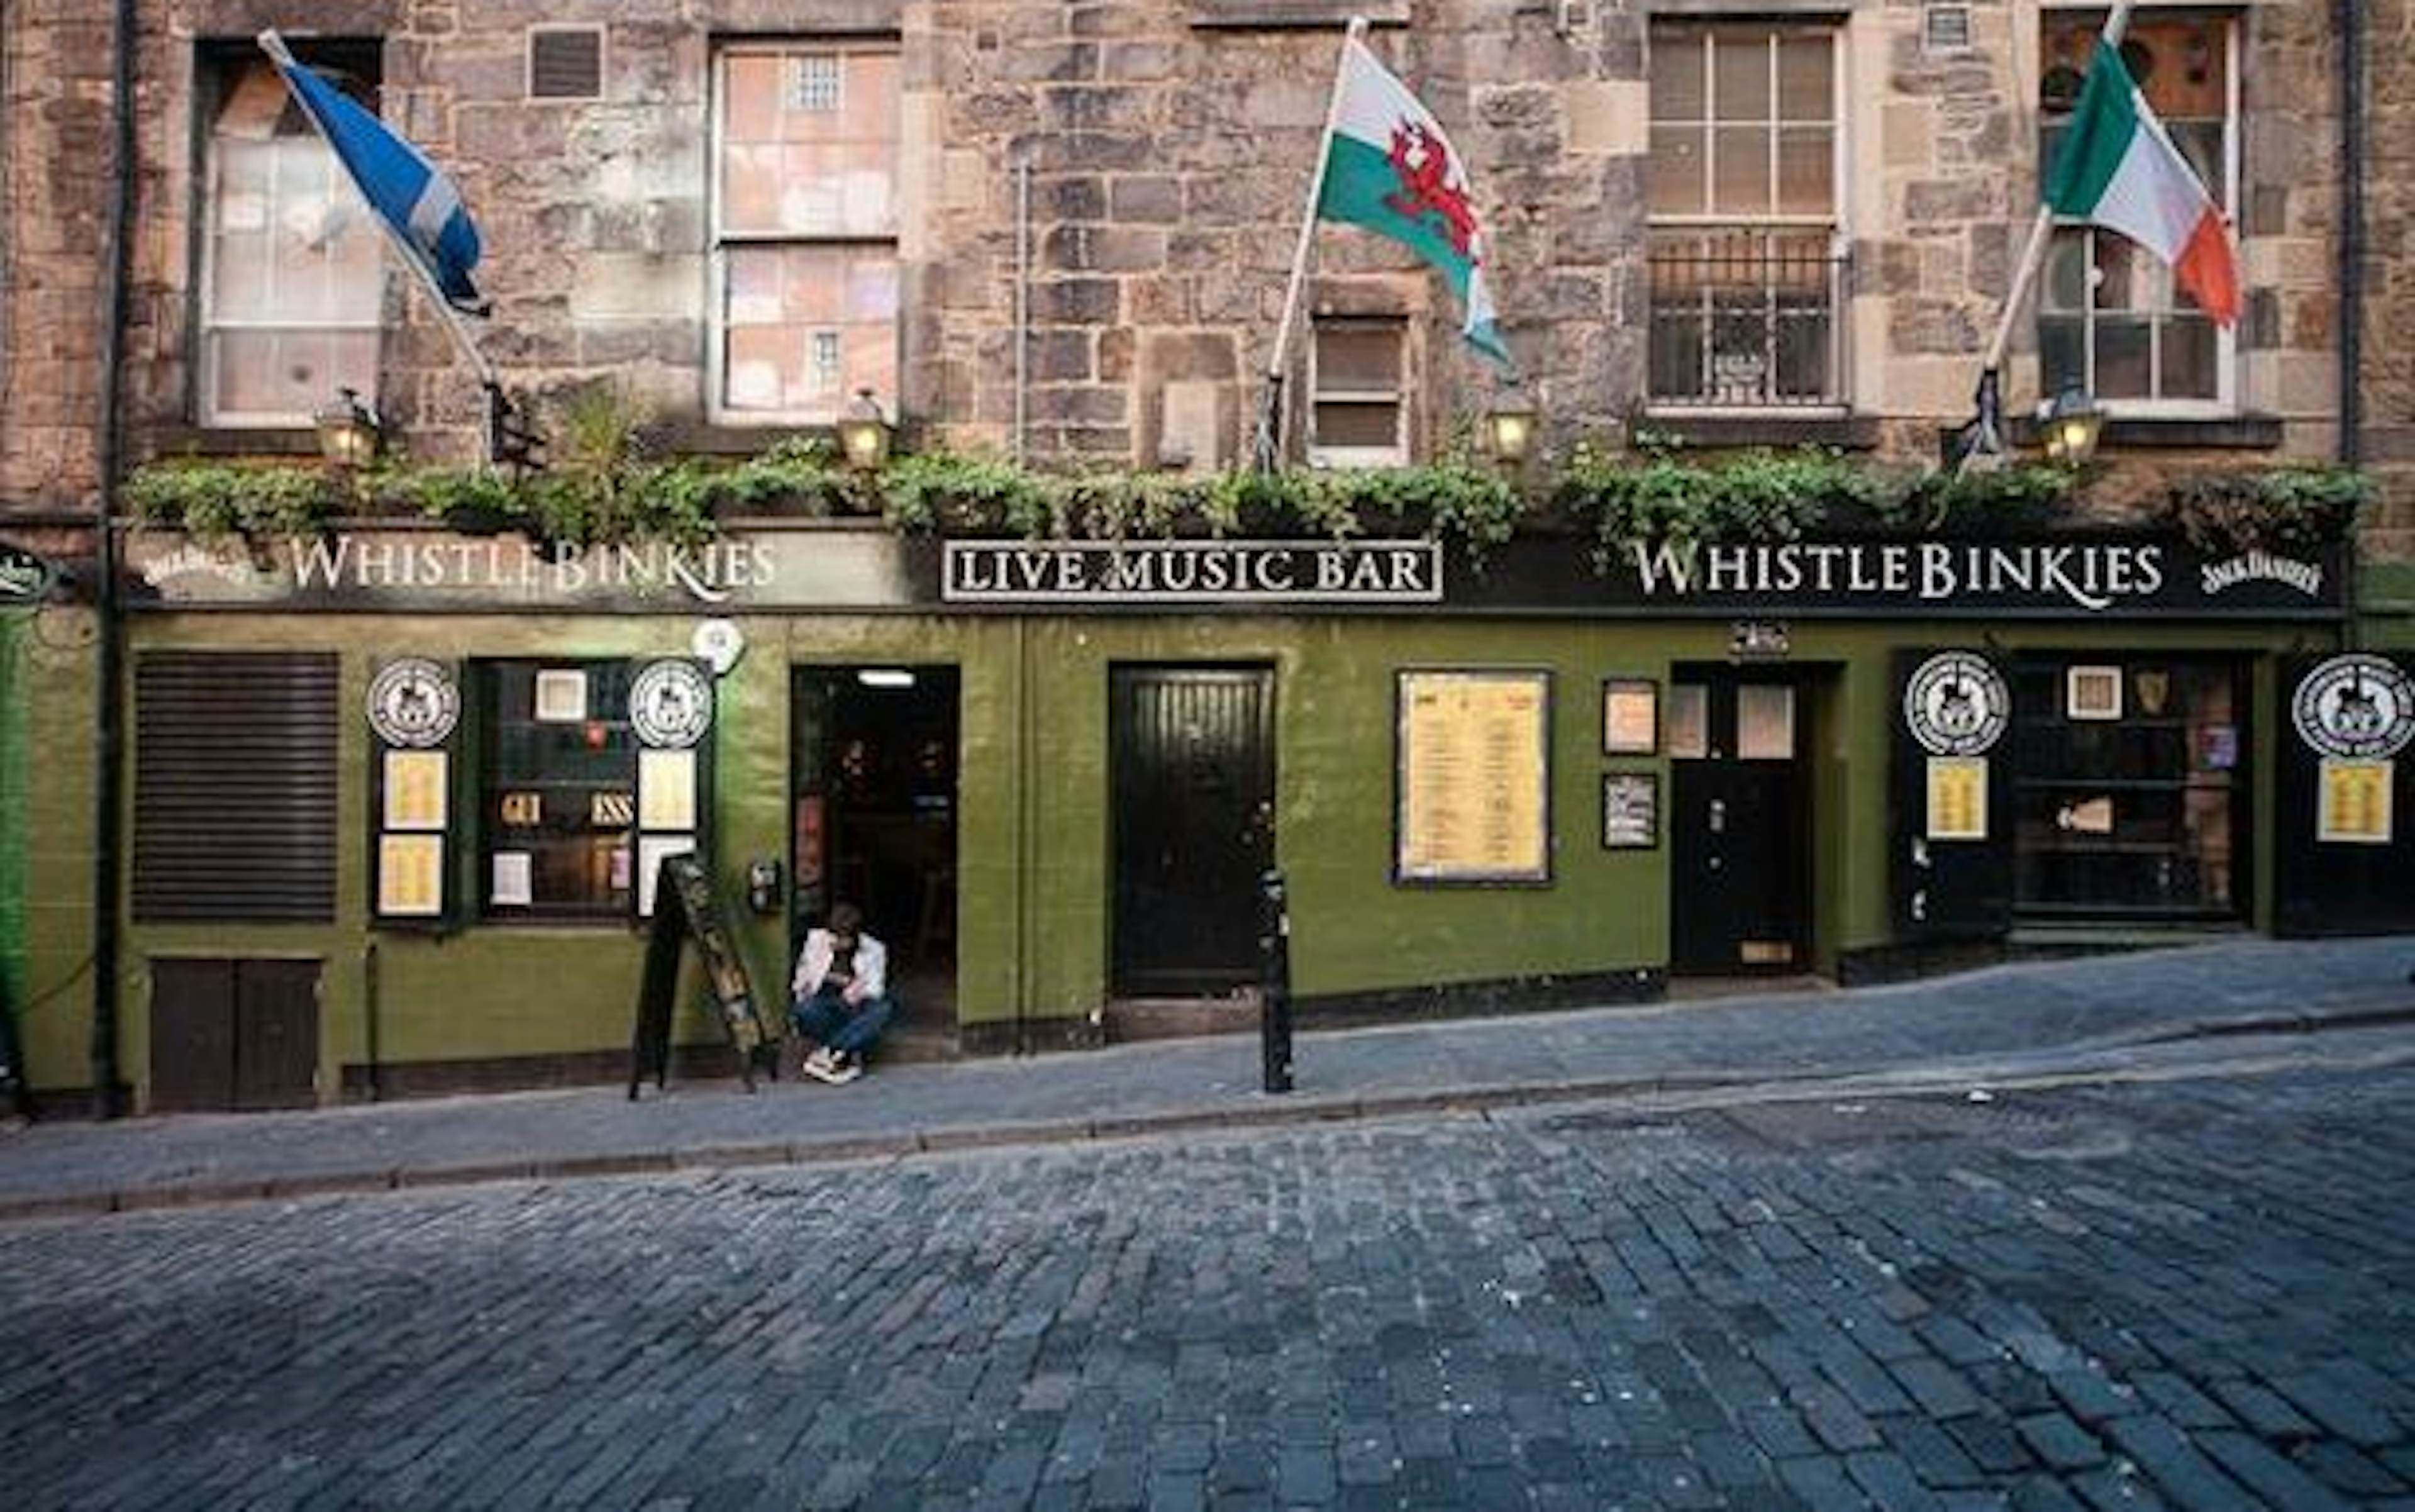 Edinburgh city centre pubs and bars ...